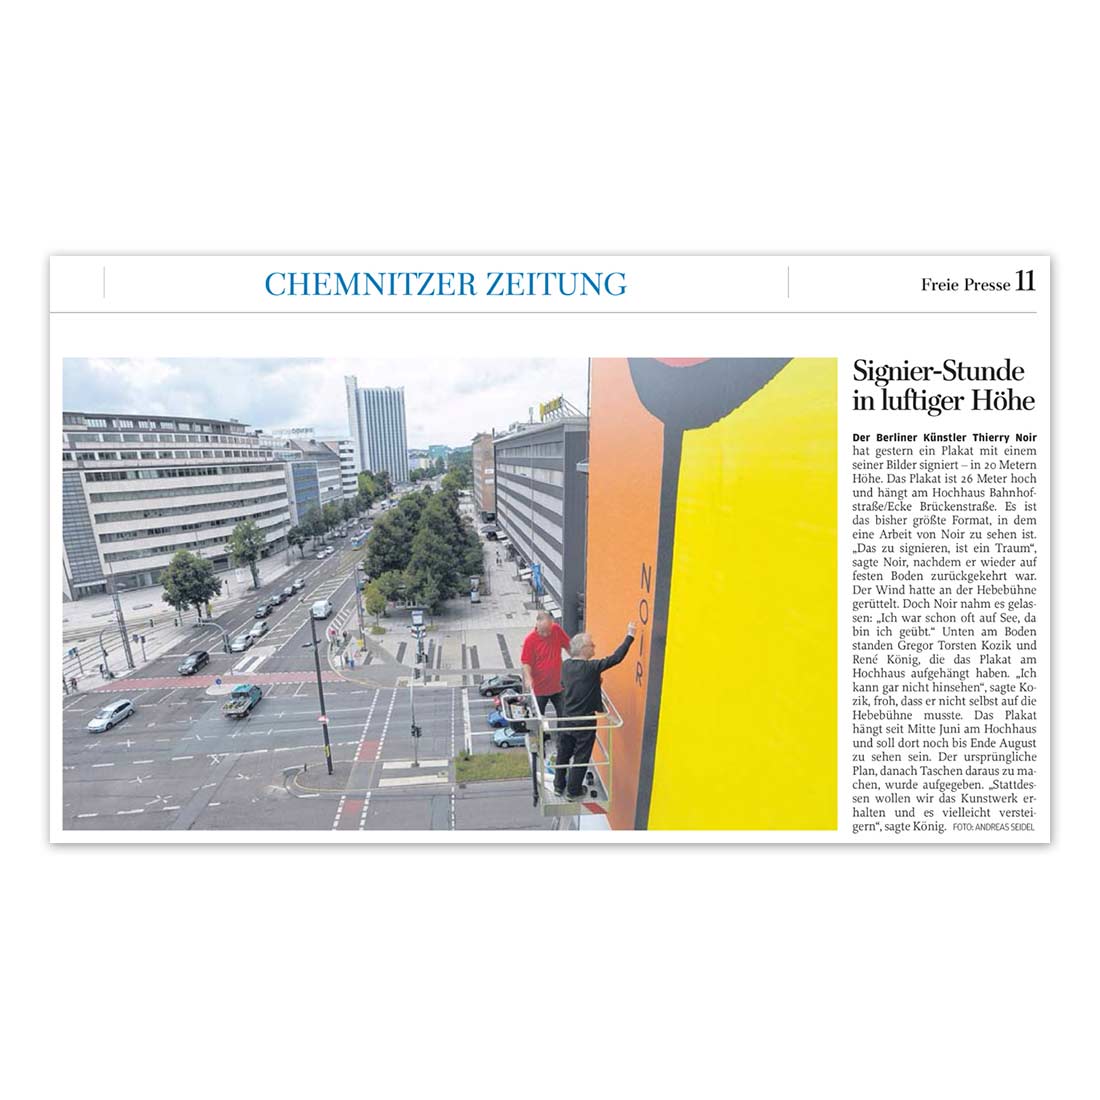 GERMENS artfashion - Freie Presse Chemnitz - 05.08.2014